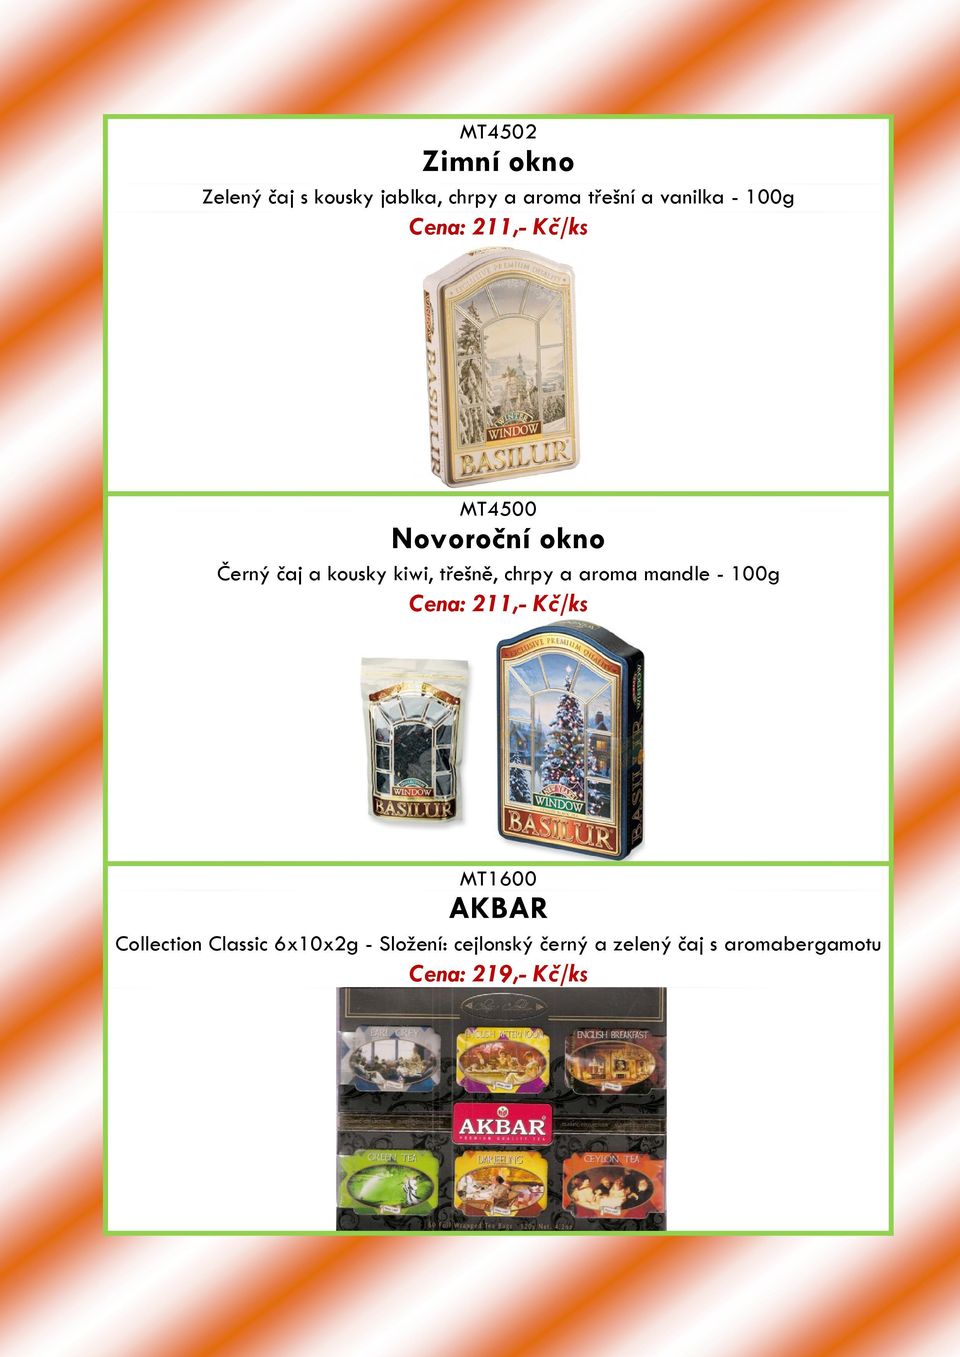 chrpy a aroma mandle - 100g Cena: 211,- Kč/ks MT1600 AKBAR Collection Classic